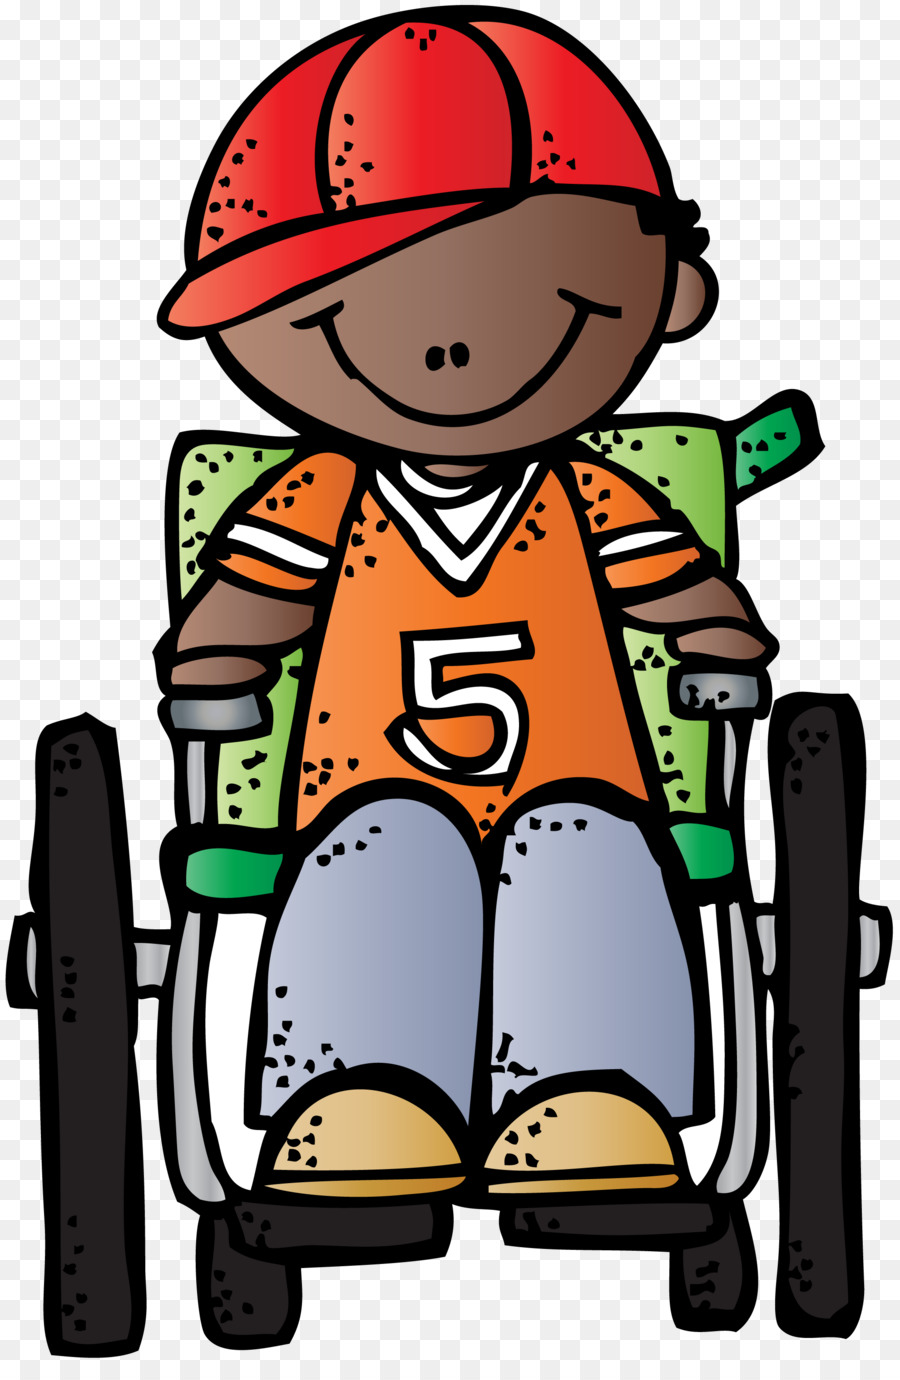 Rollstuhl, Behinderung, Kind clipart - melonheadz Bleistift cliparts